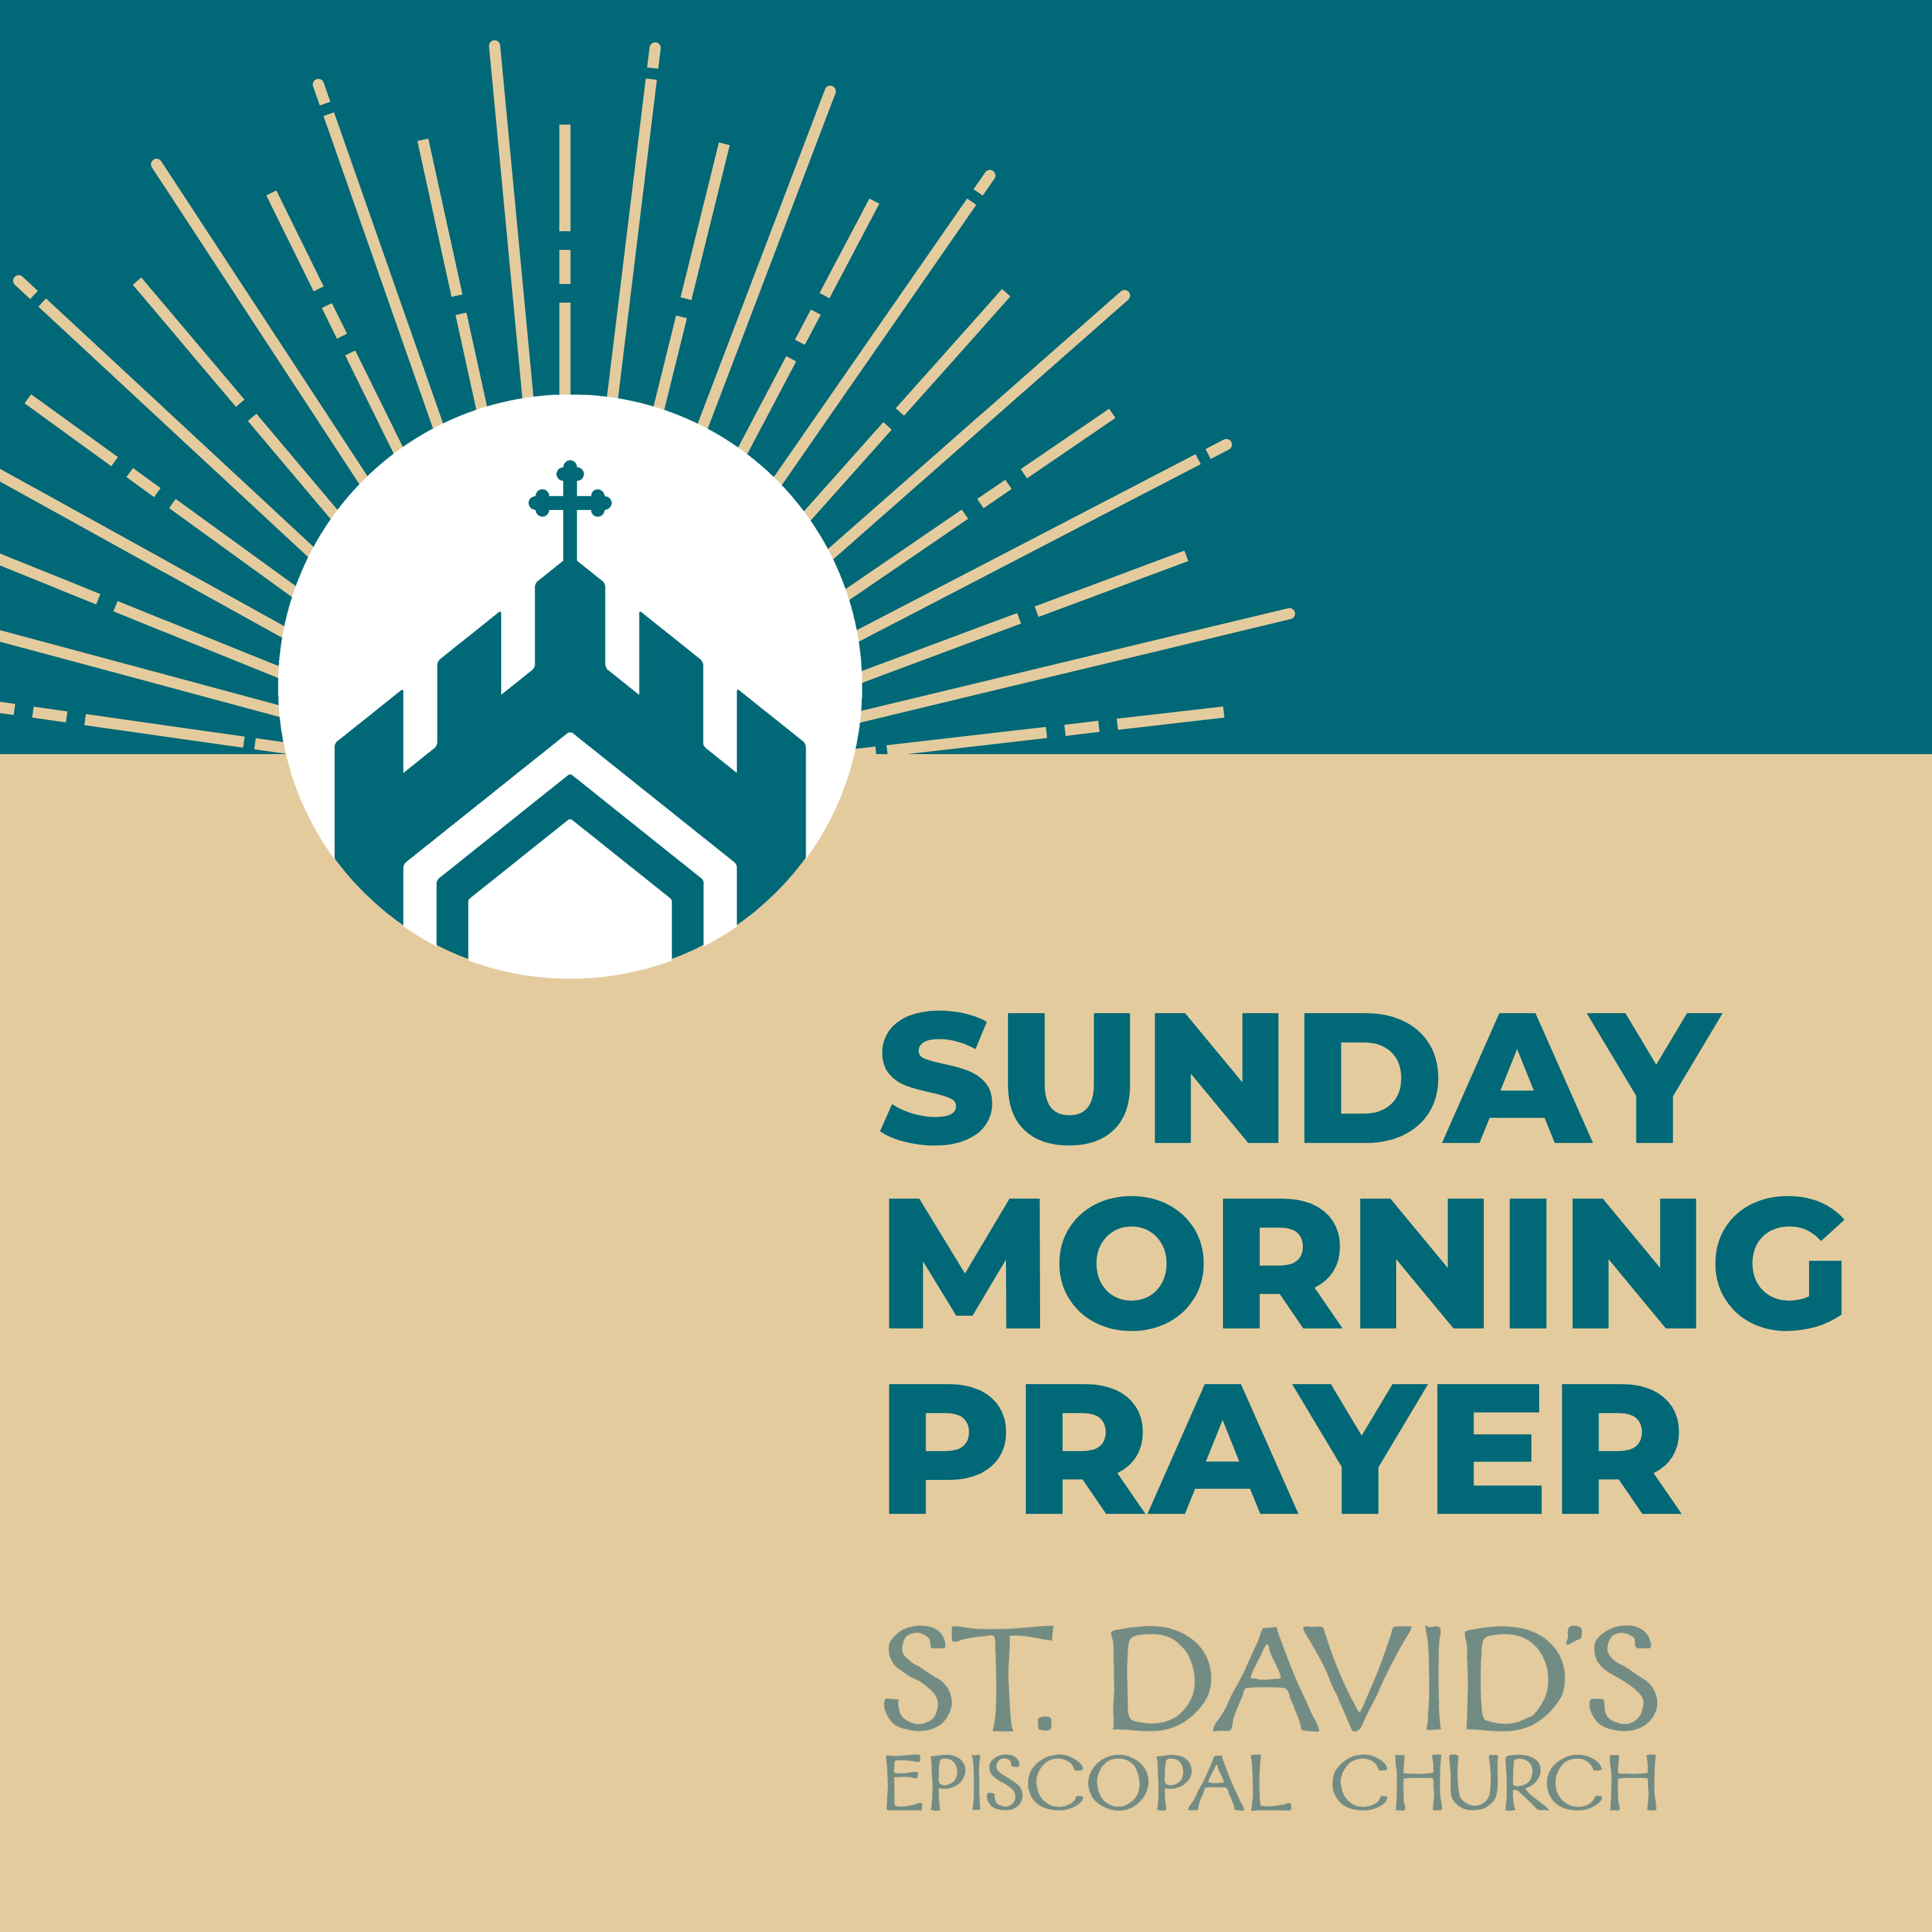 Sunday Morning Prayer: Rite Two, Year 2, 8th Sunday after Pentecost